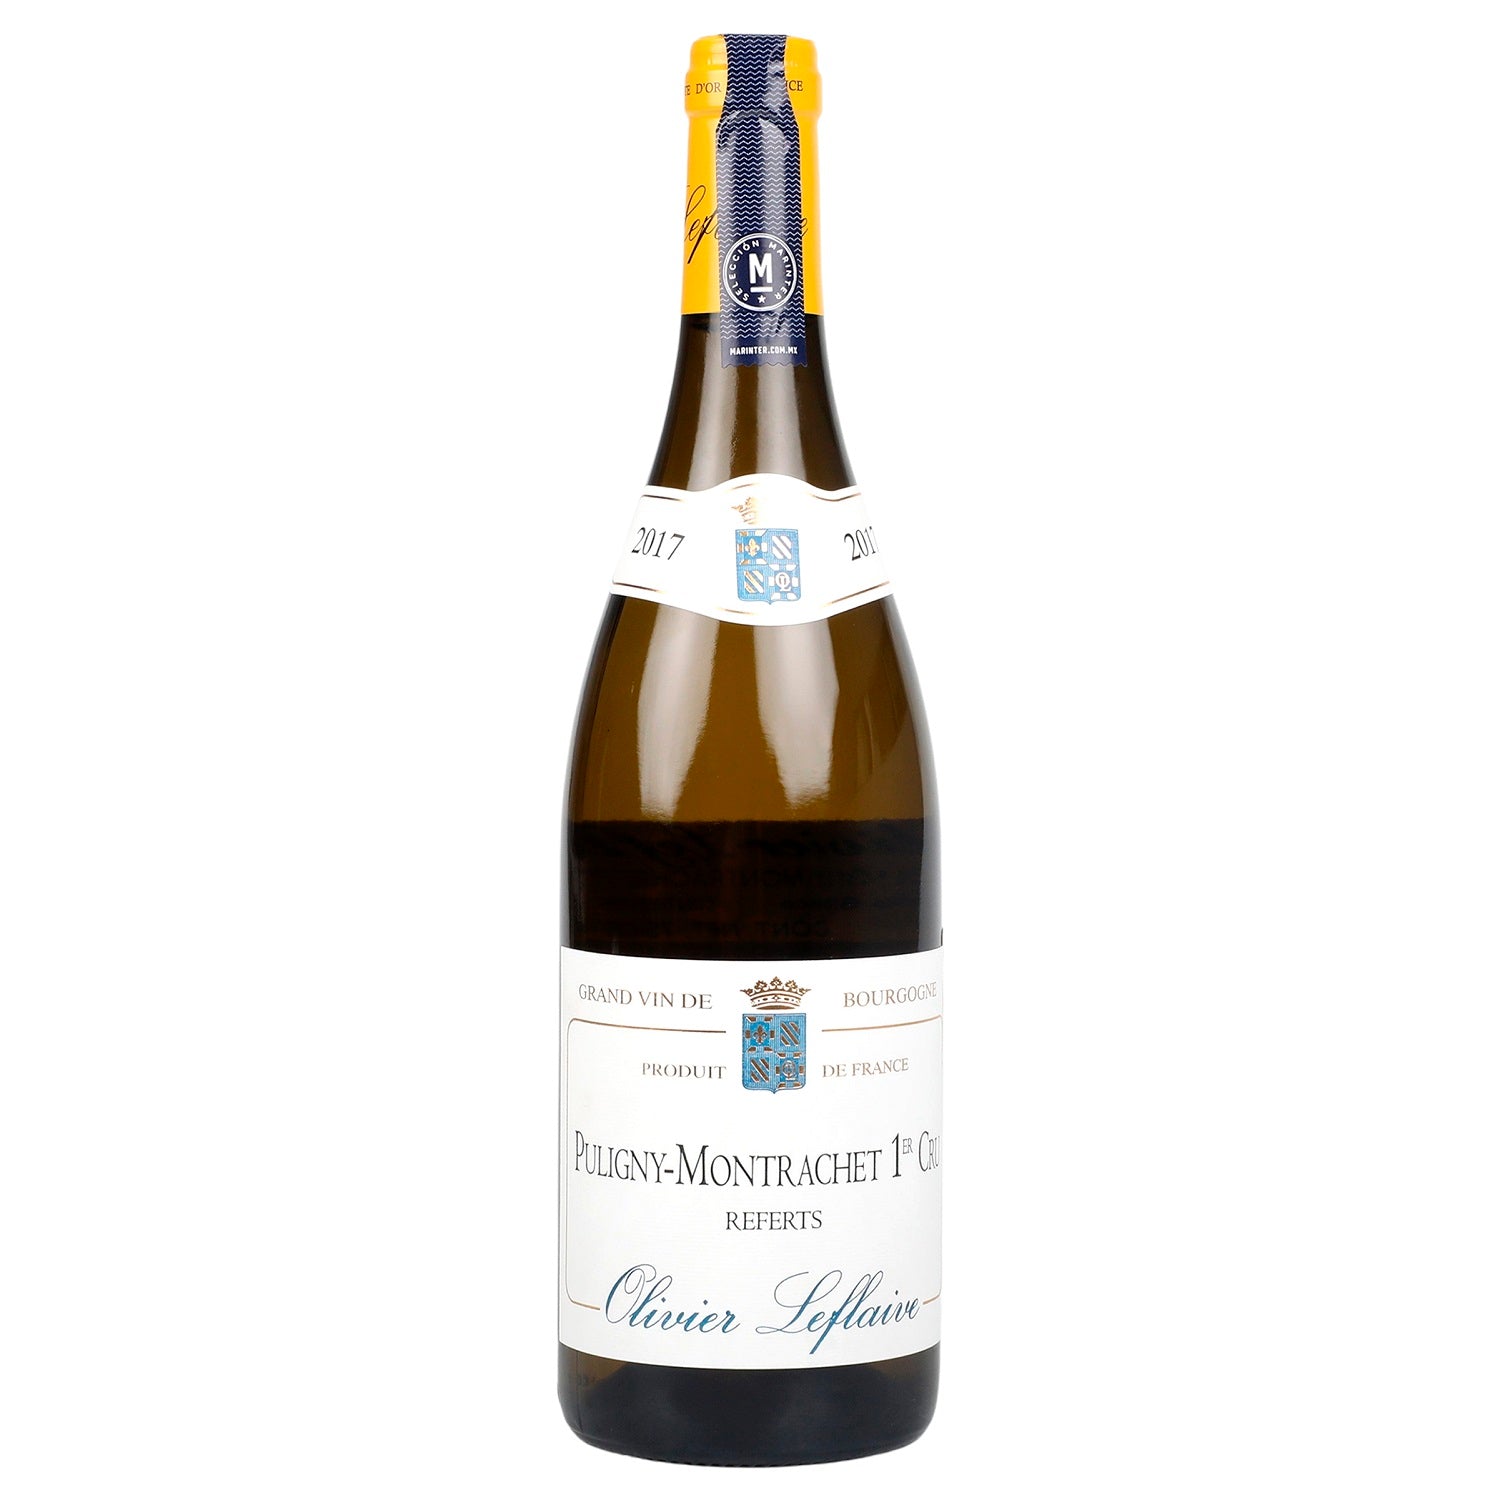 Vino Blanco - Olivier Leflaive Puligny-Montrachet 1erCru 2017 - 750 ml